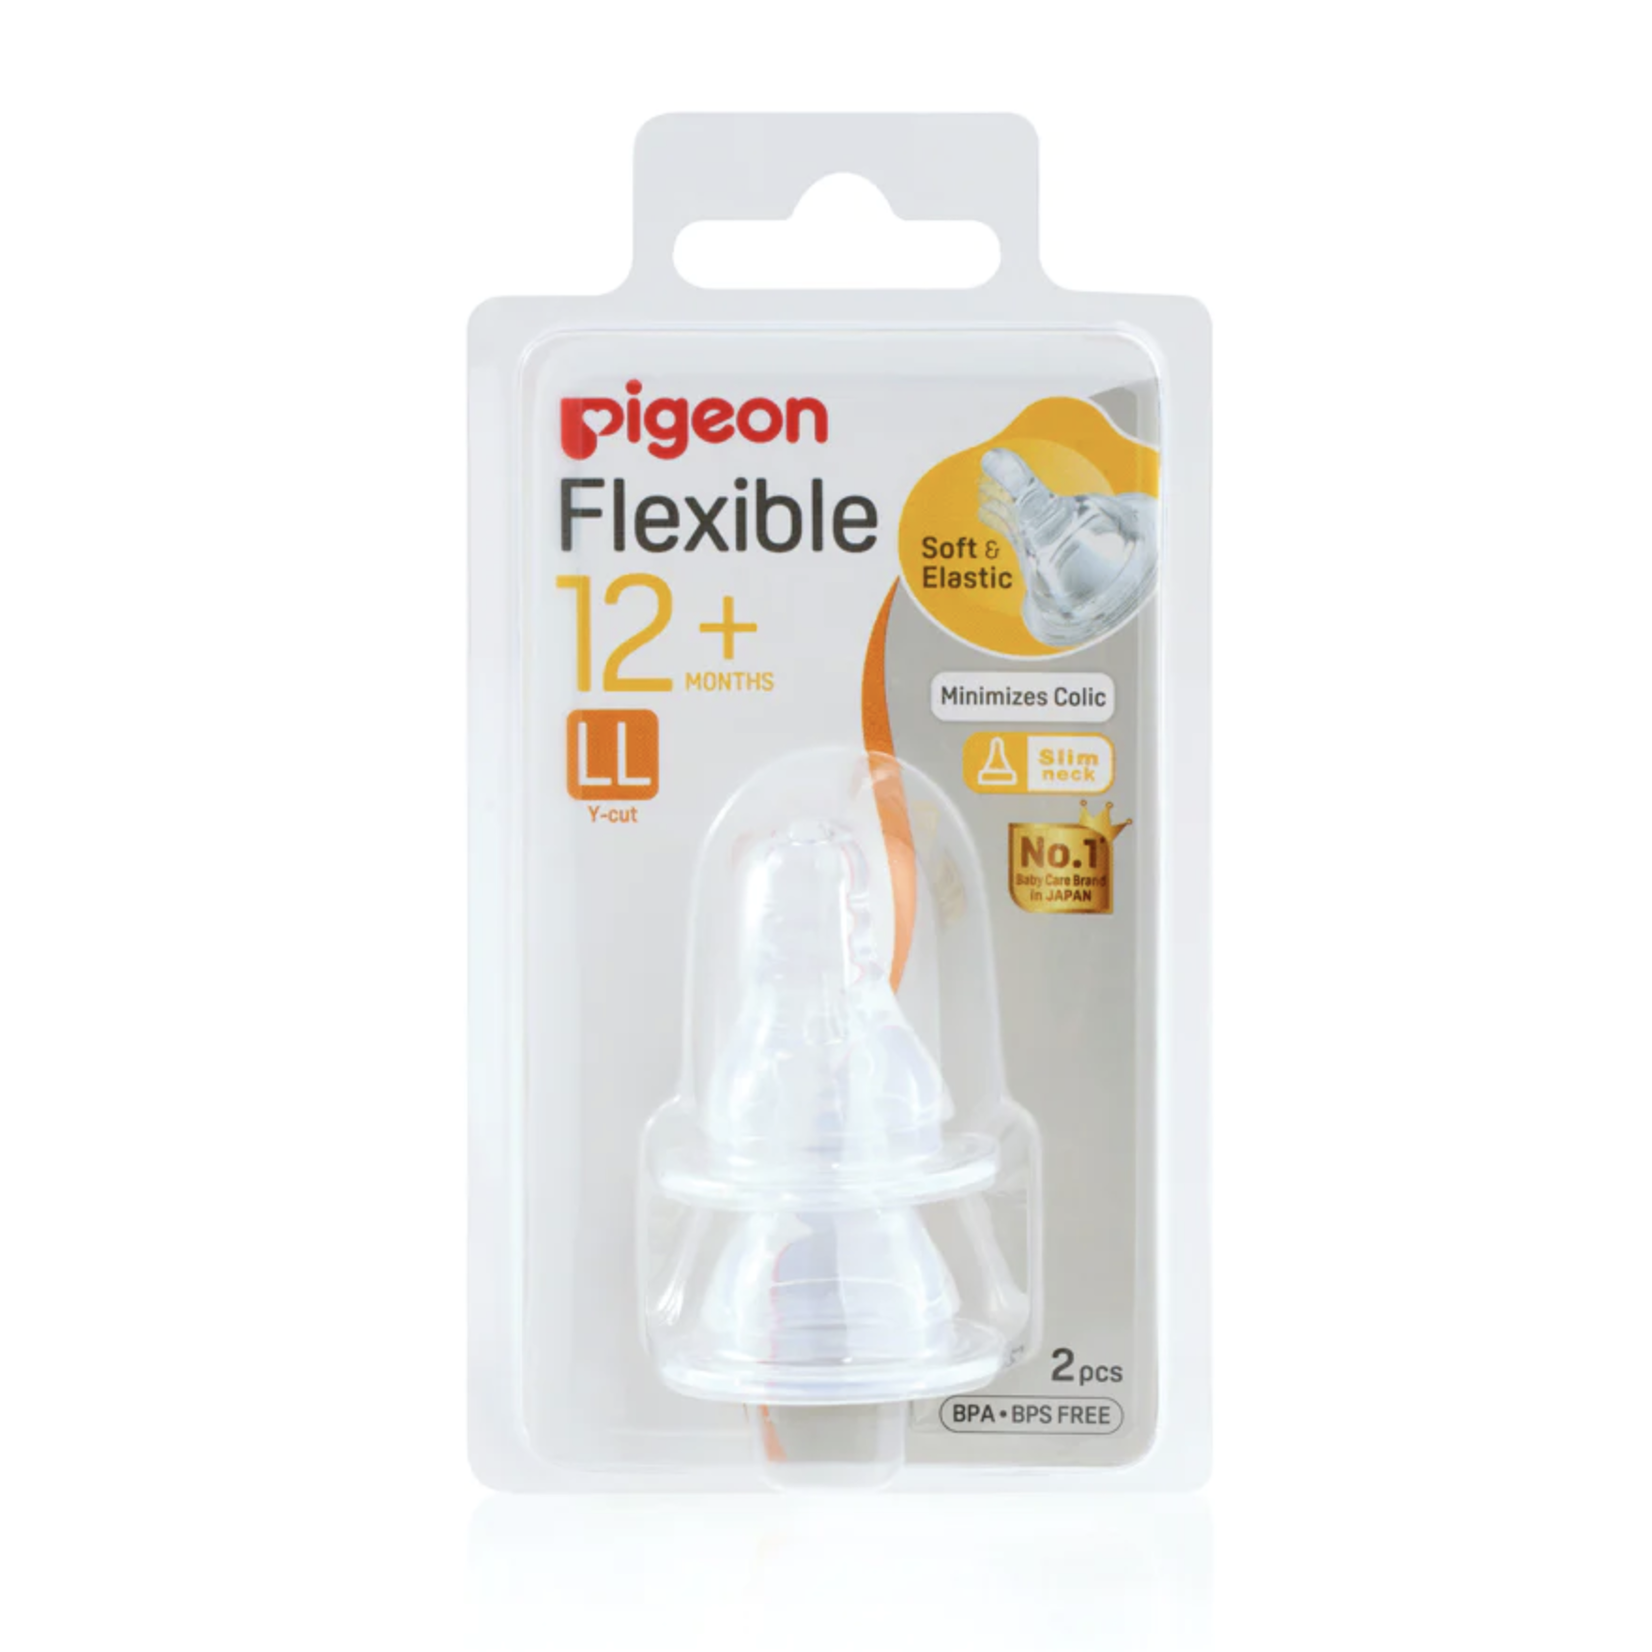 Pigeon Flexible™ Peristaltic 2pk Teat (LL)